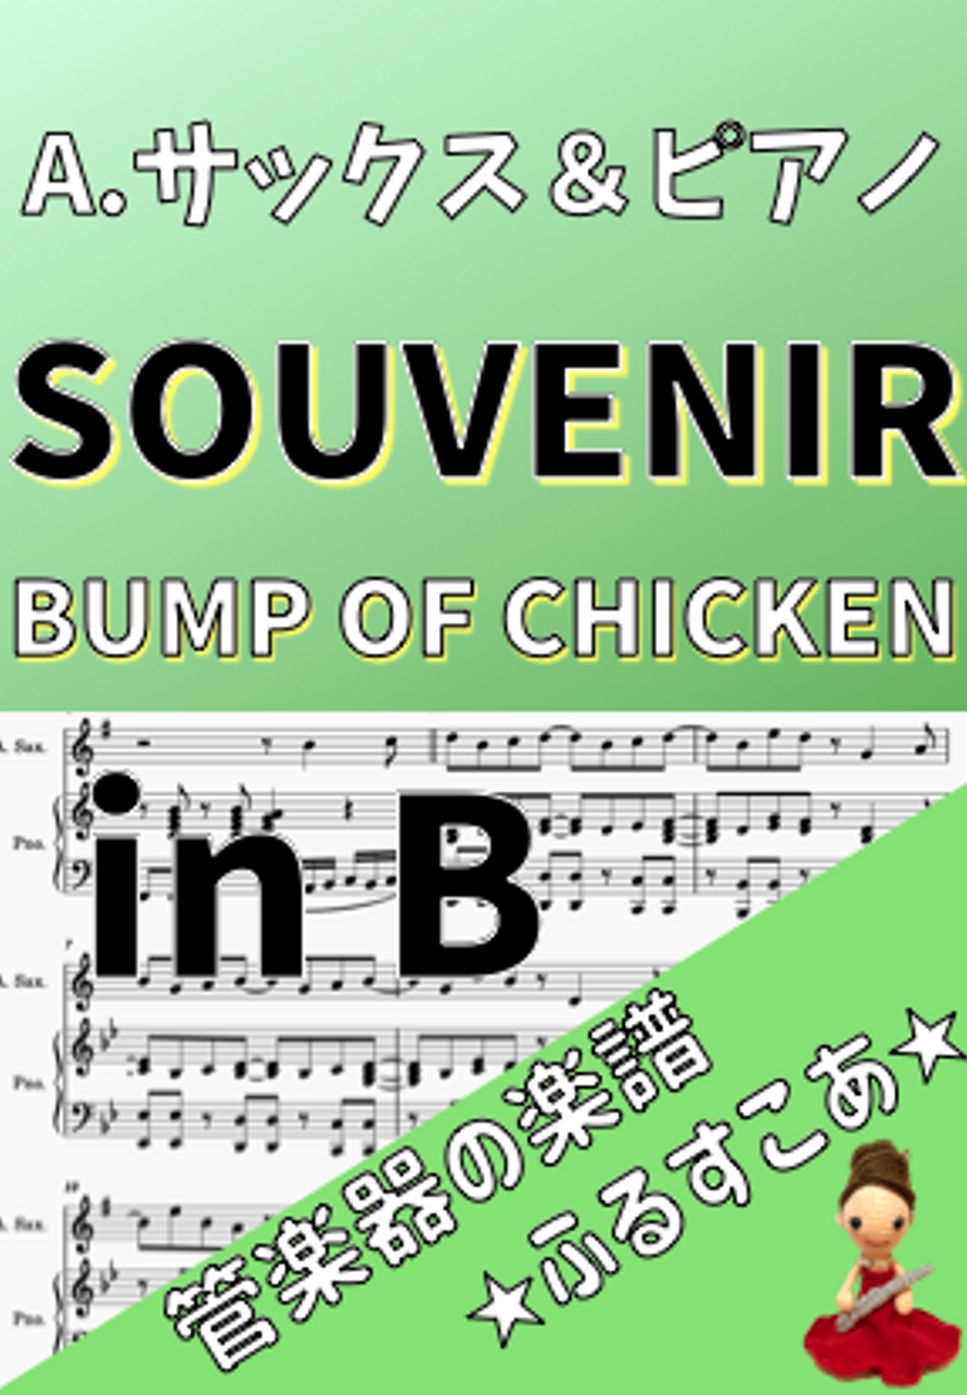 BUMP OF CHICKEN - SOUVENIR by 管楽器の楽譜★ふるすこあ